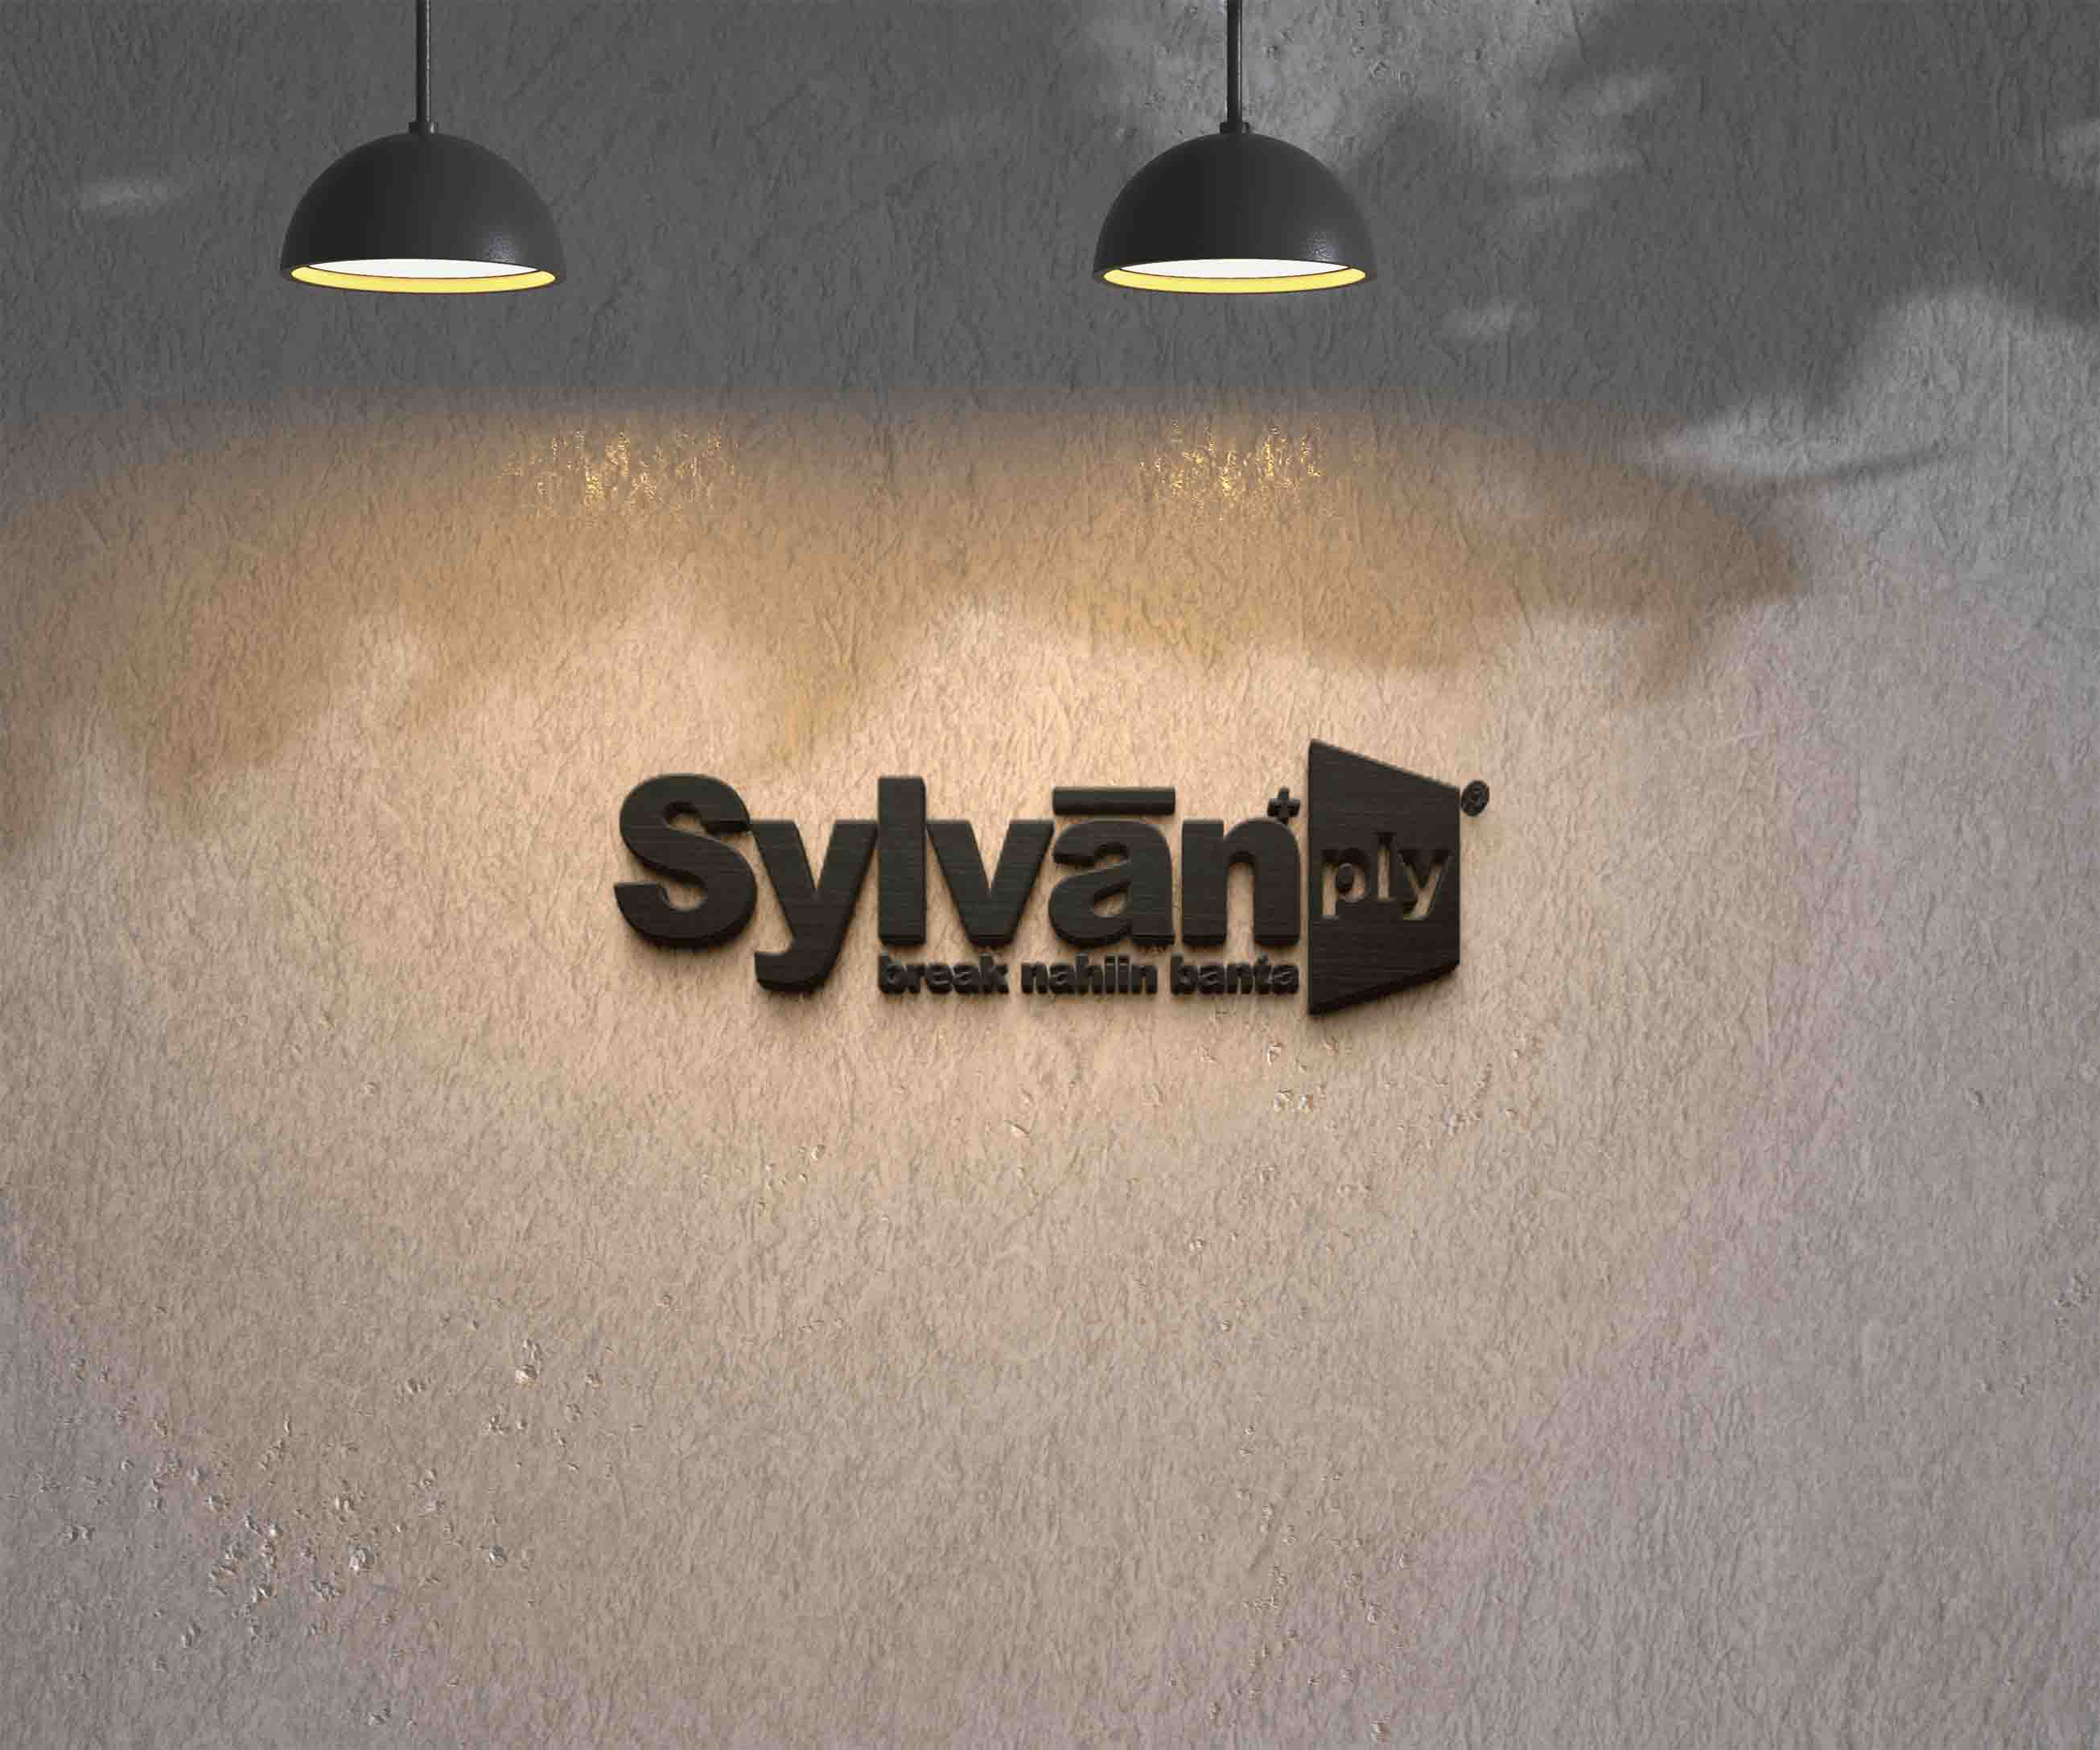 SylvanPly